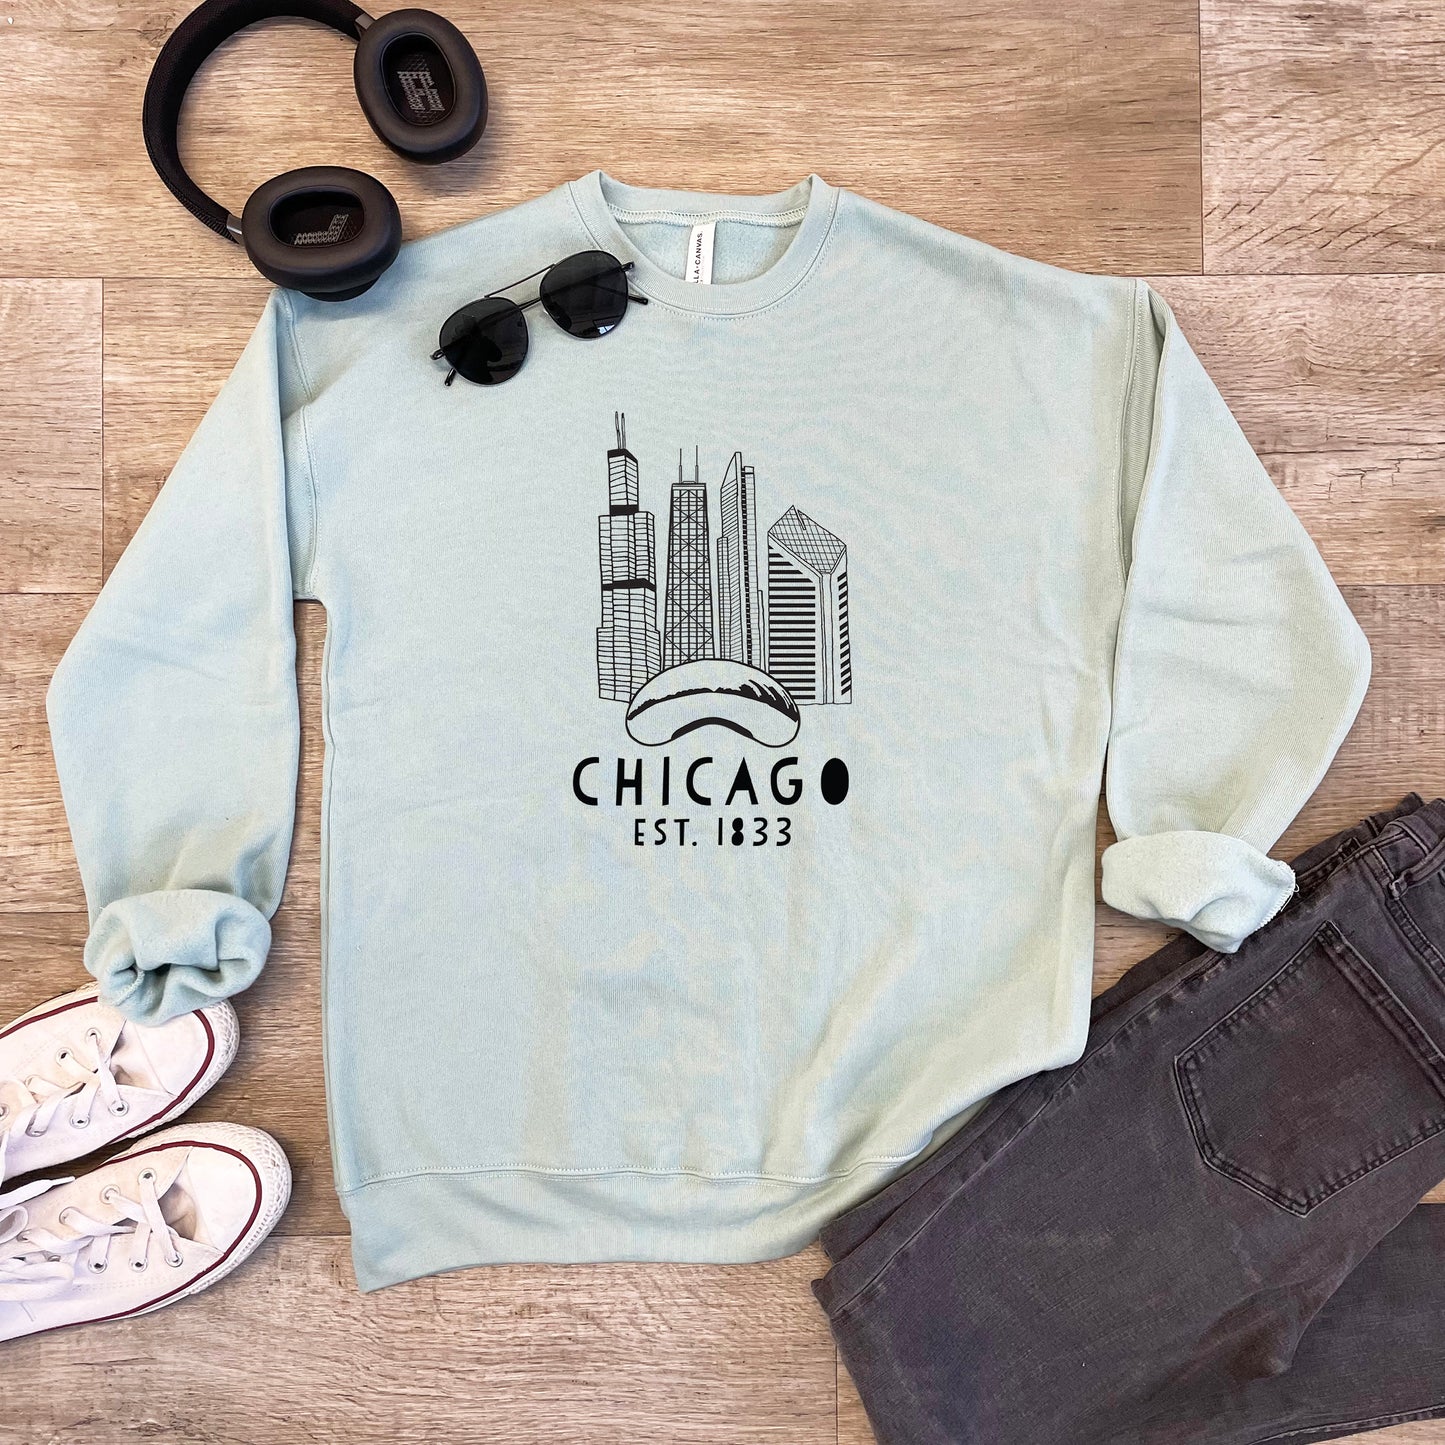 Chicago Skyline - Unisex Sweatshirt - Heather Gray or Dusty Blue